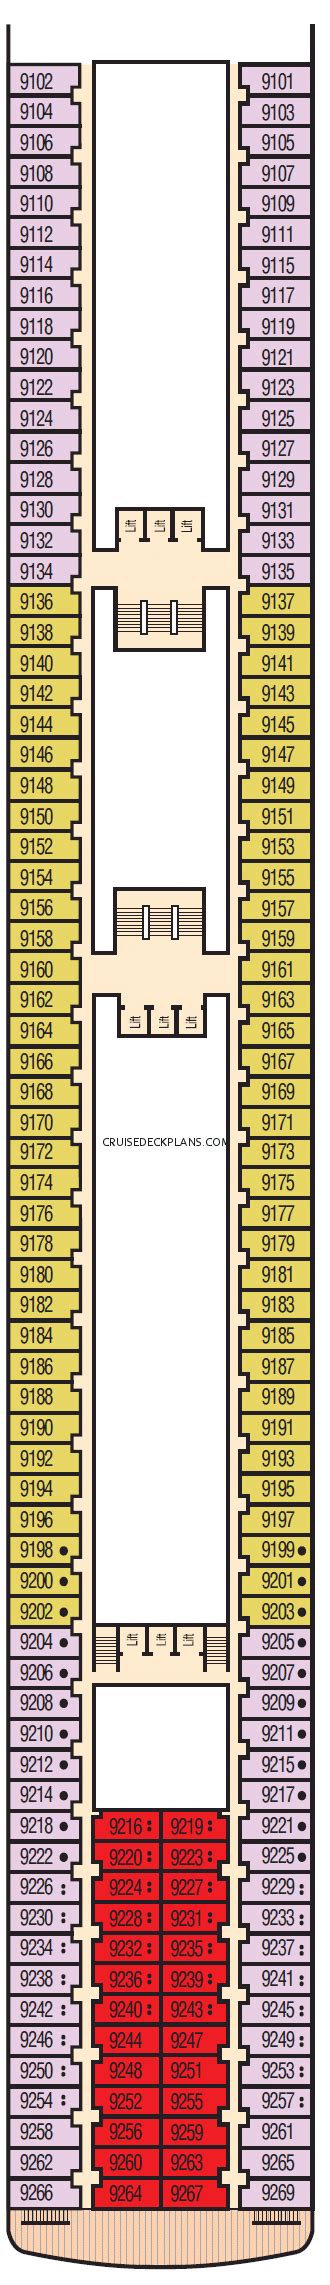 Pacific Jewel Deck Plans Cabin Diagrams Pictures